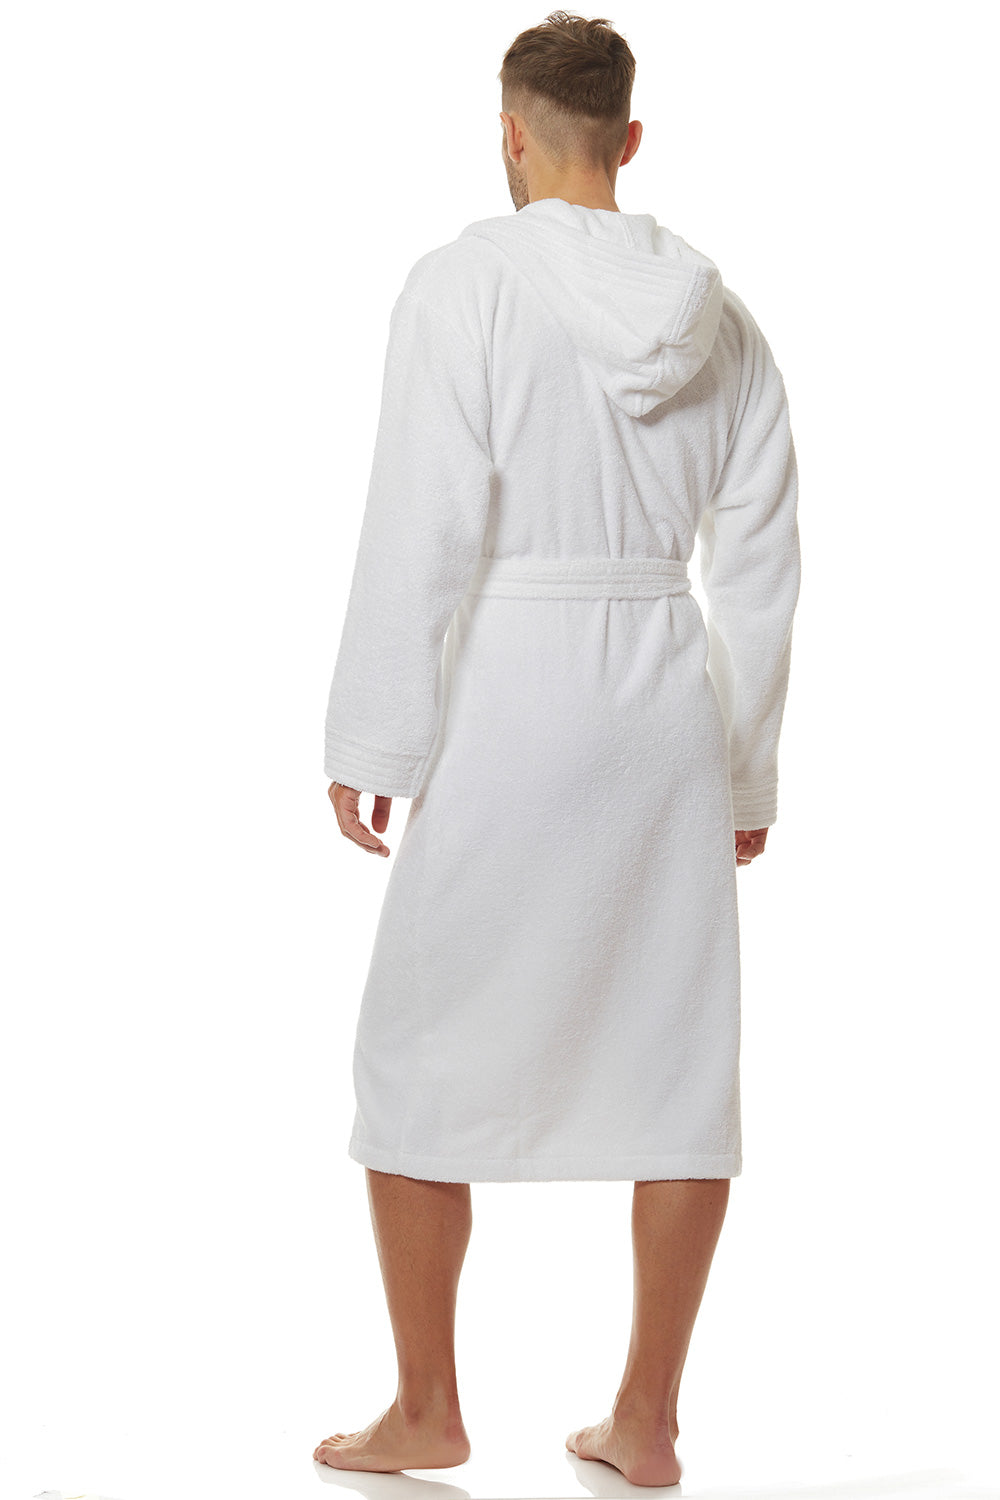 Bathrobe model 152614 Elsy Style Bathrobes & Pyjamas for Men